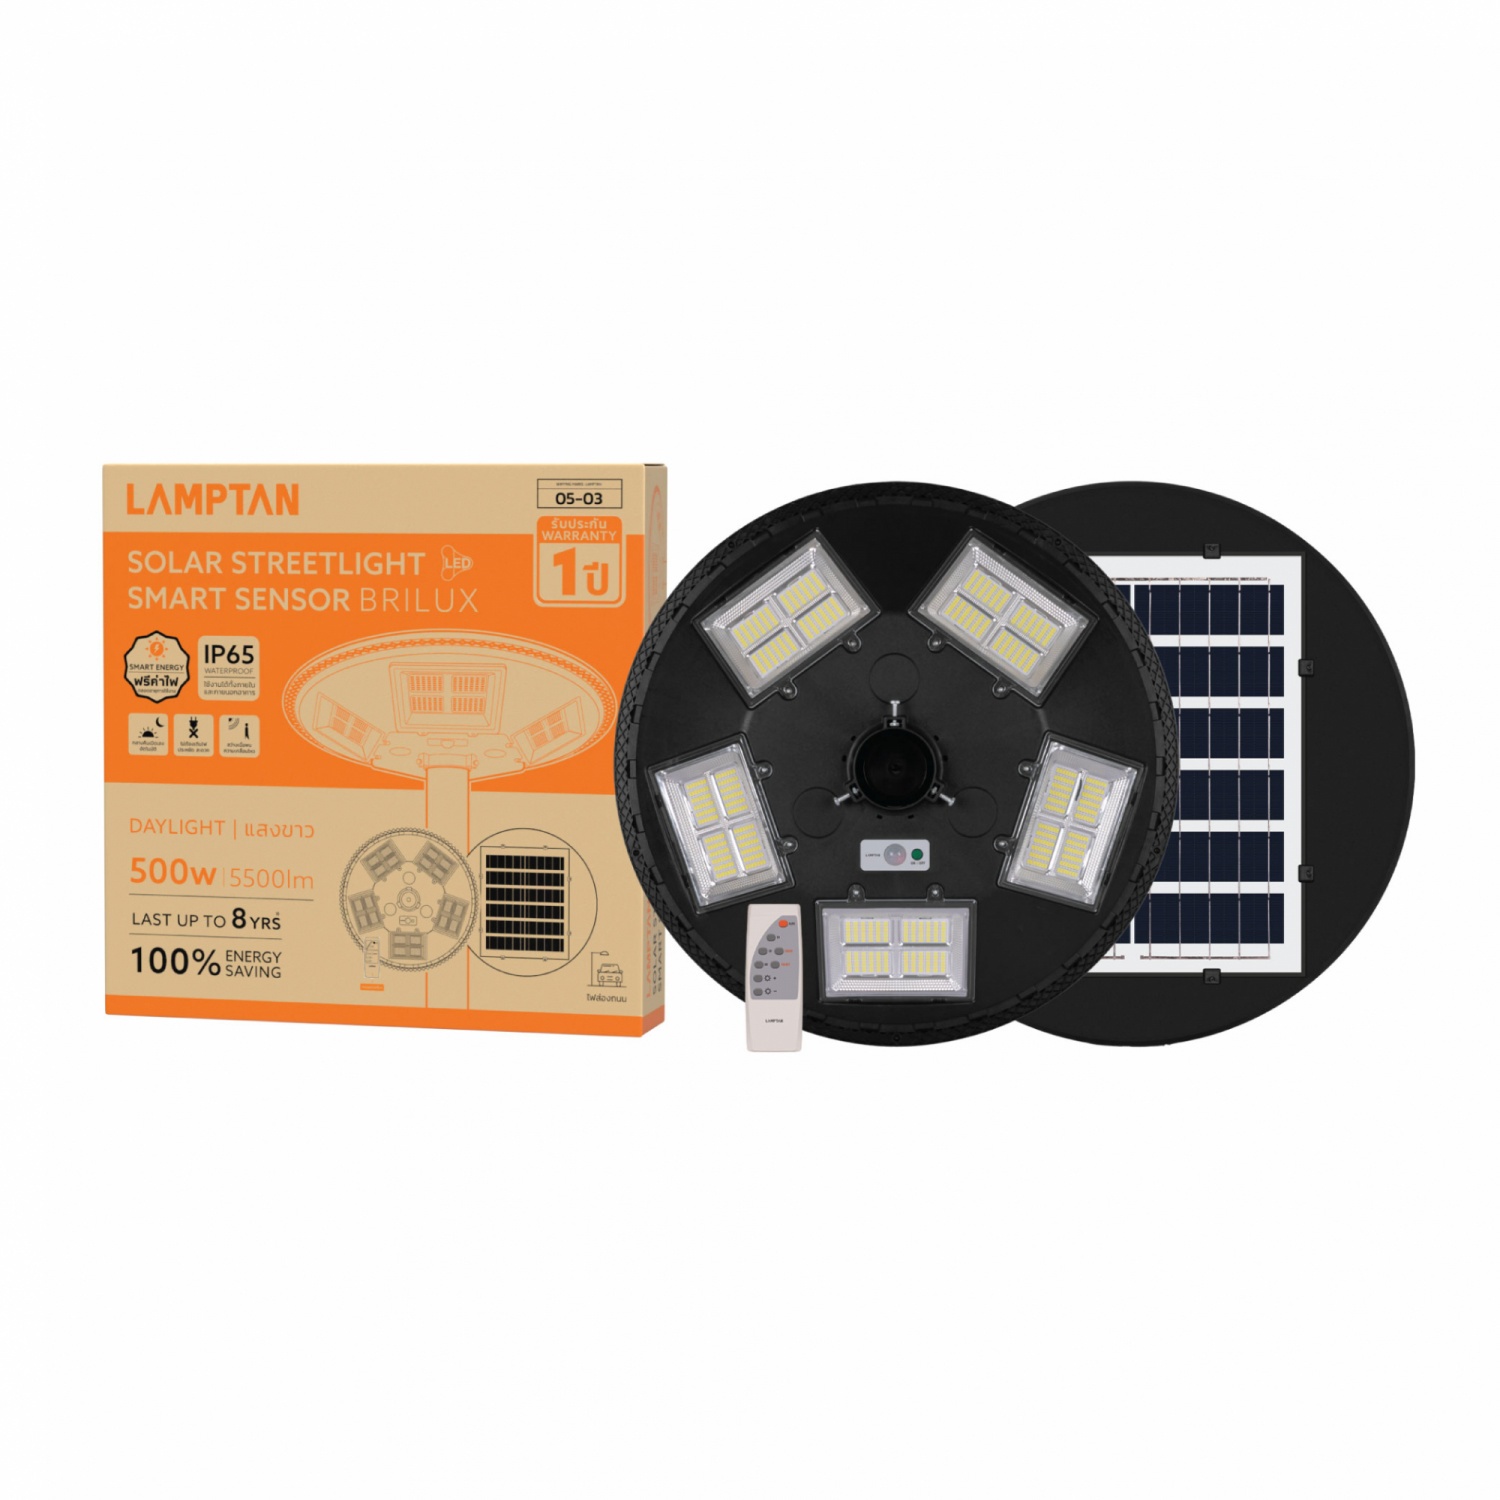 LAMPTAN โคมไฟถนนโซลาร์เซลล์ LED 500W แสงเดย์ไลท์ IP65 รุ่นสมาร์ทเซ็นเซอร์ บริลักซ์ + รีโมท